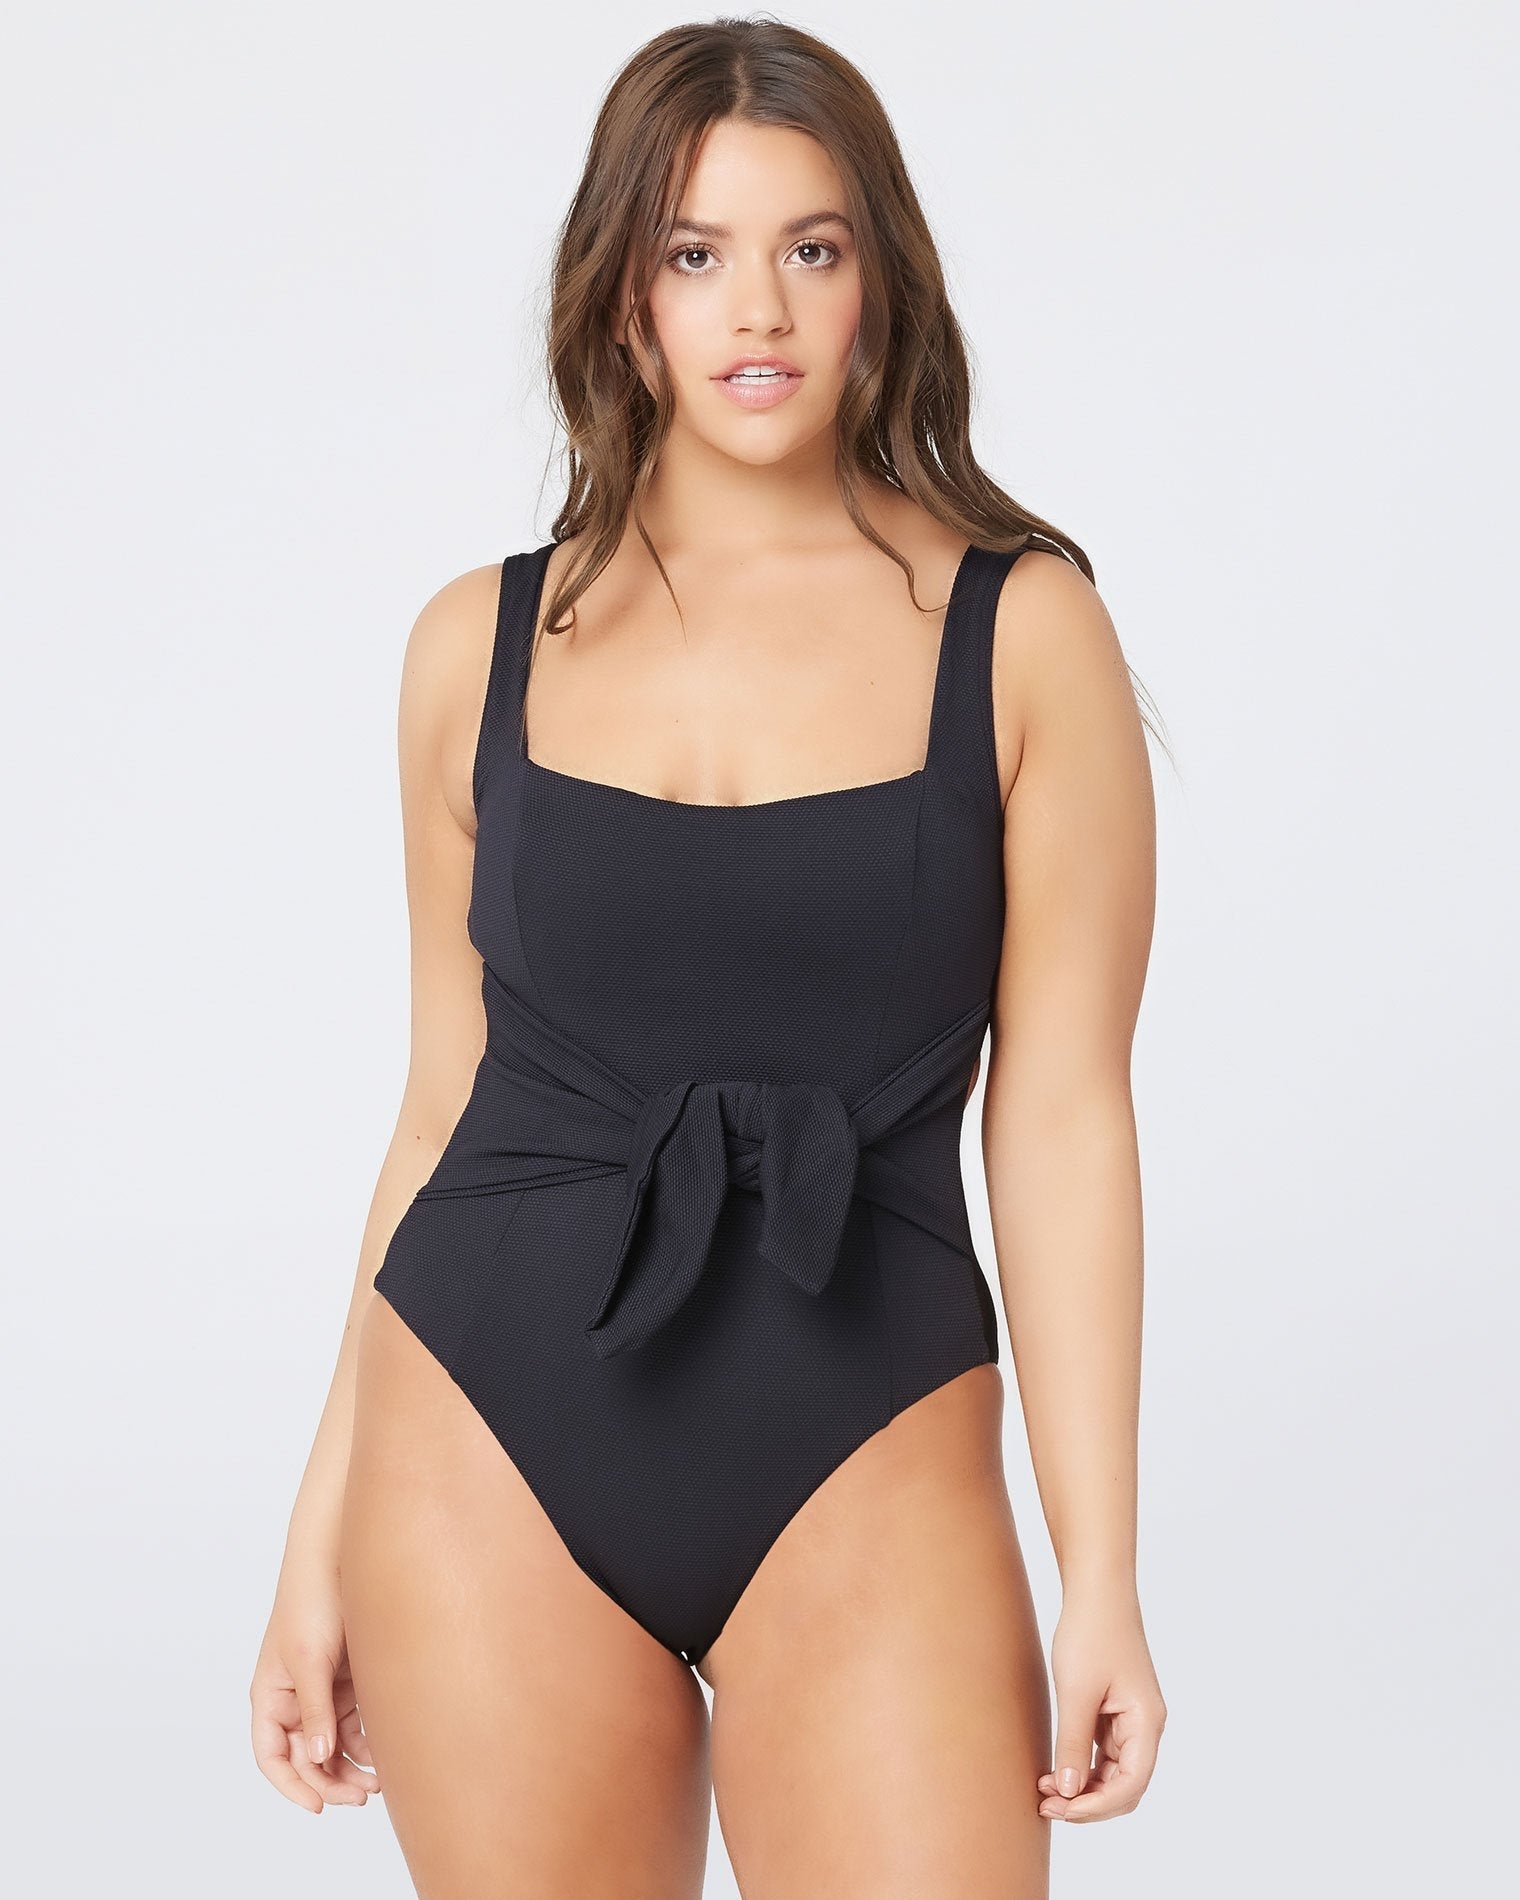 Balboa One Piece Swimsuit - Black Black | Model: Kacie (size: XL)